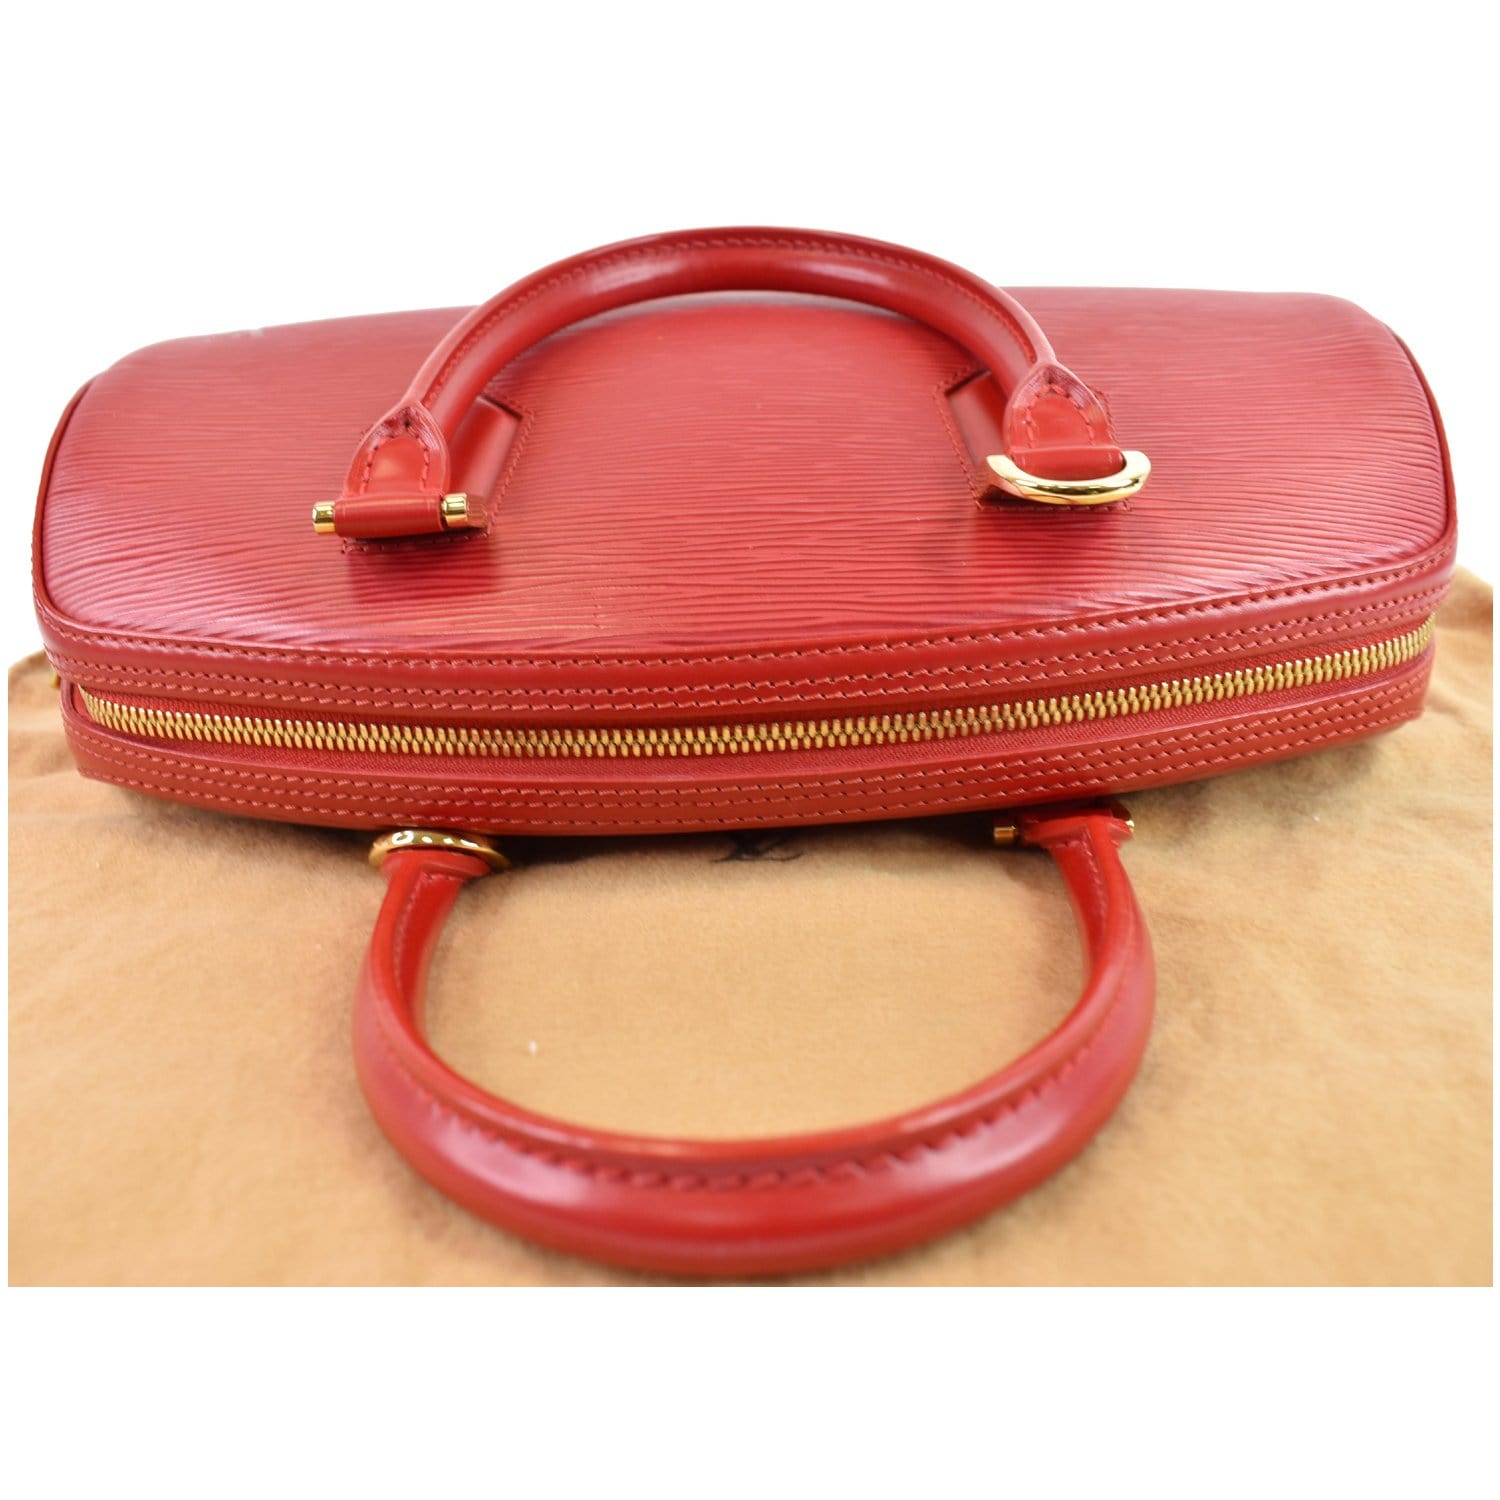 LOUIS VUITTON M52087 Epi jasmine Mini Duffle Bag Handbag Hand Bag Leather  Red